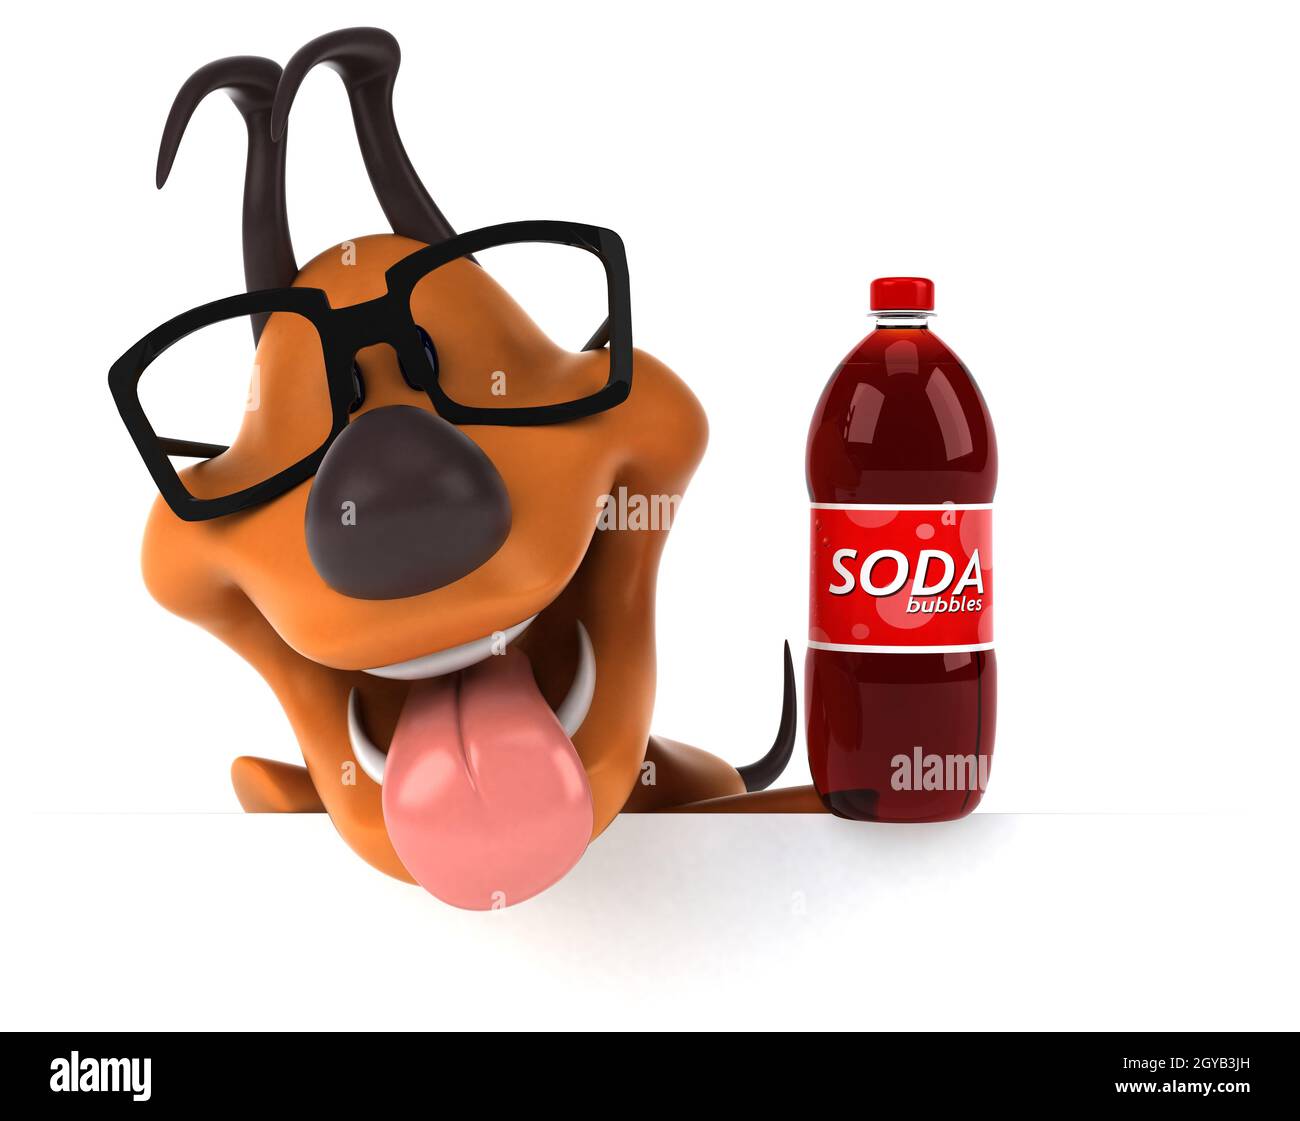 Fun dog - 3D Illustration Stock Photo